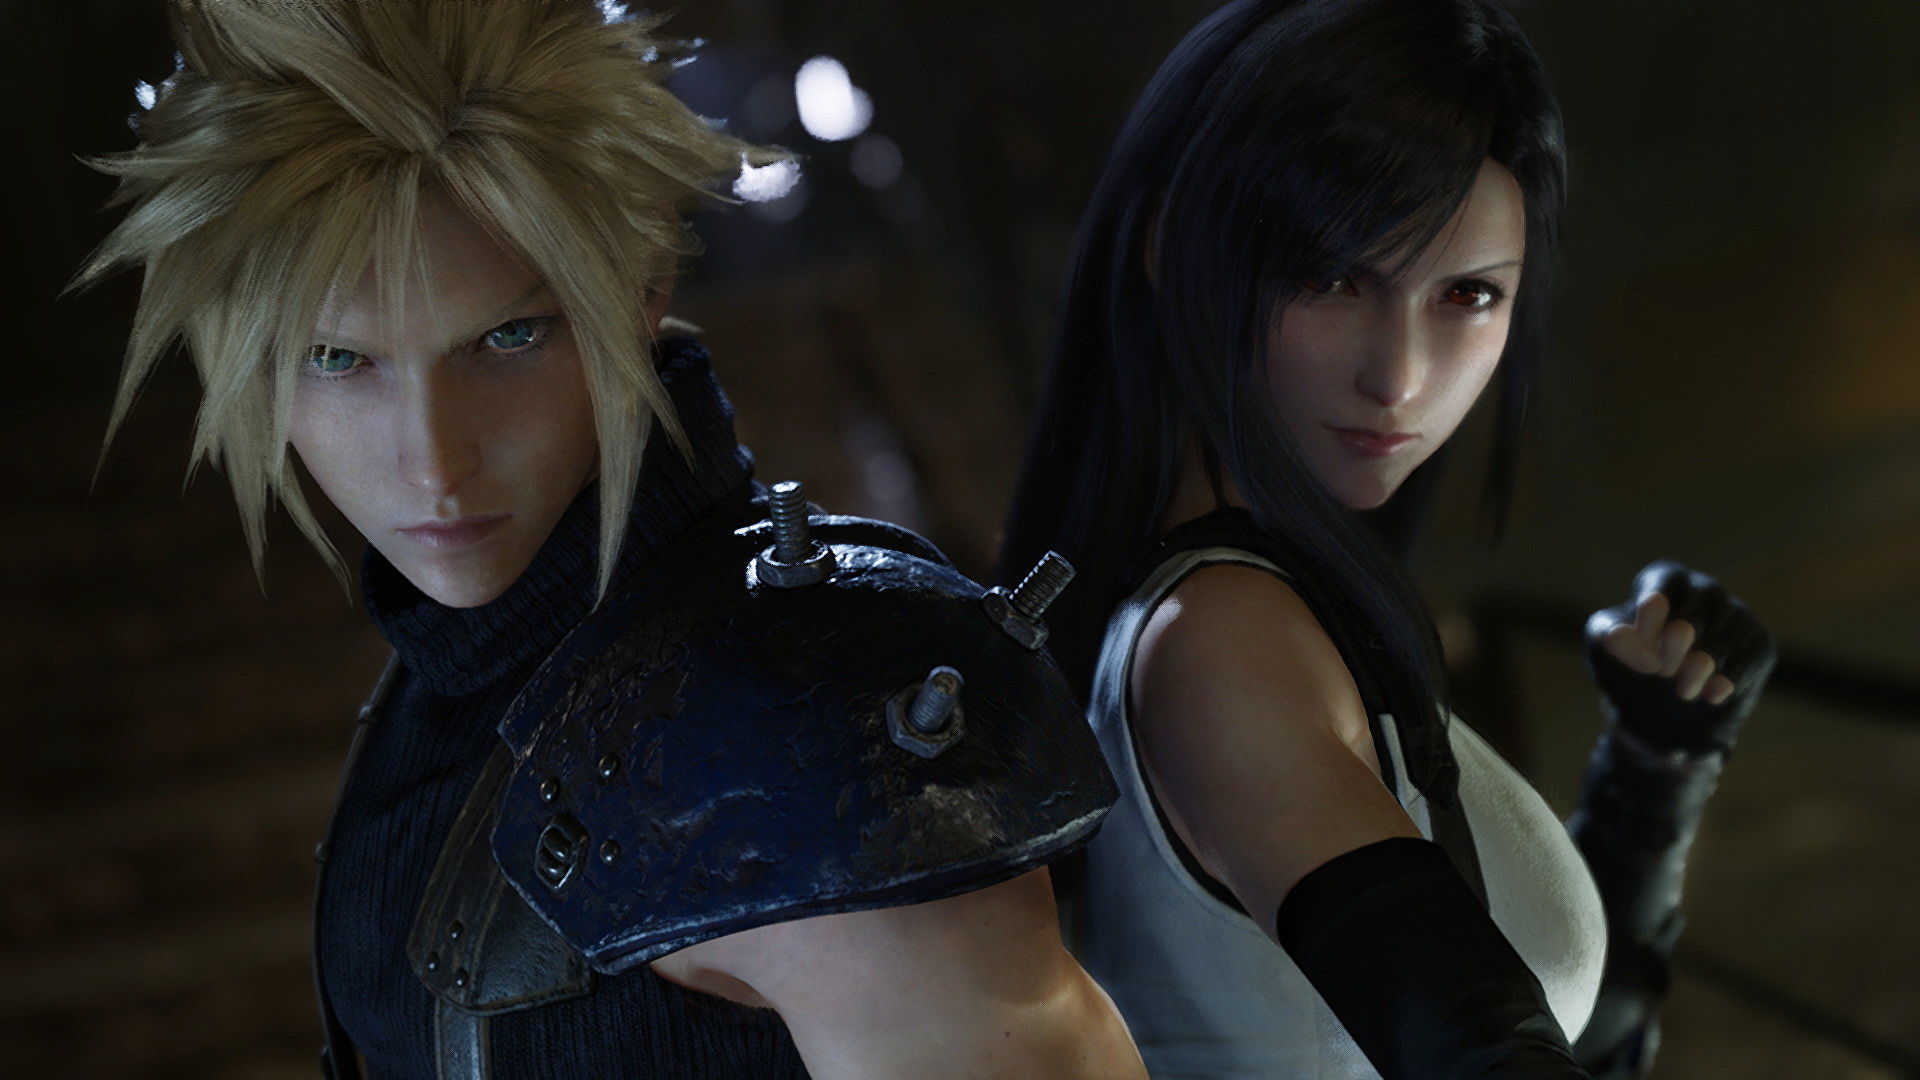 Final Fantasy 7 Remake's PS4 exclusivity ends in April 2021. Rock Paper Shotgun